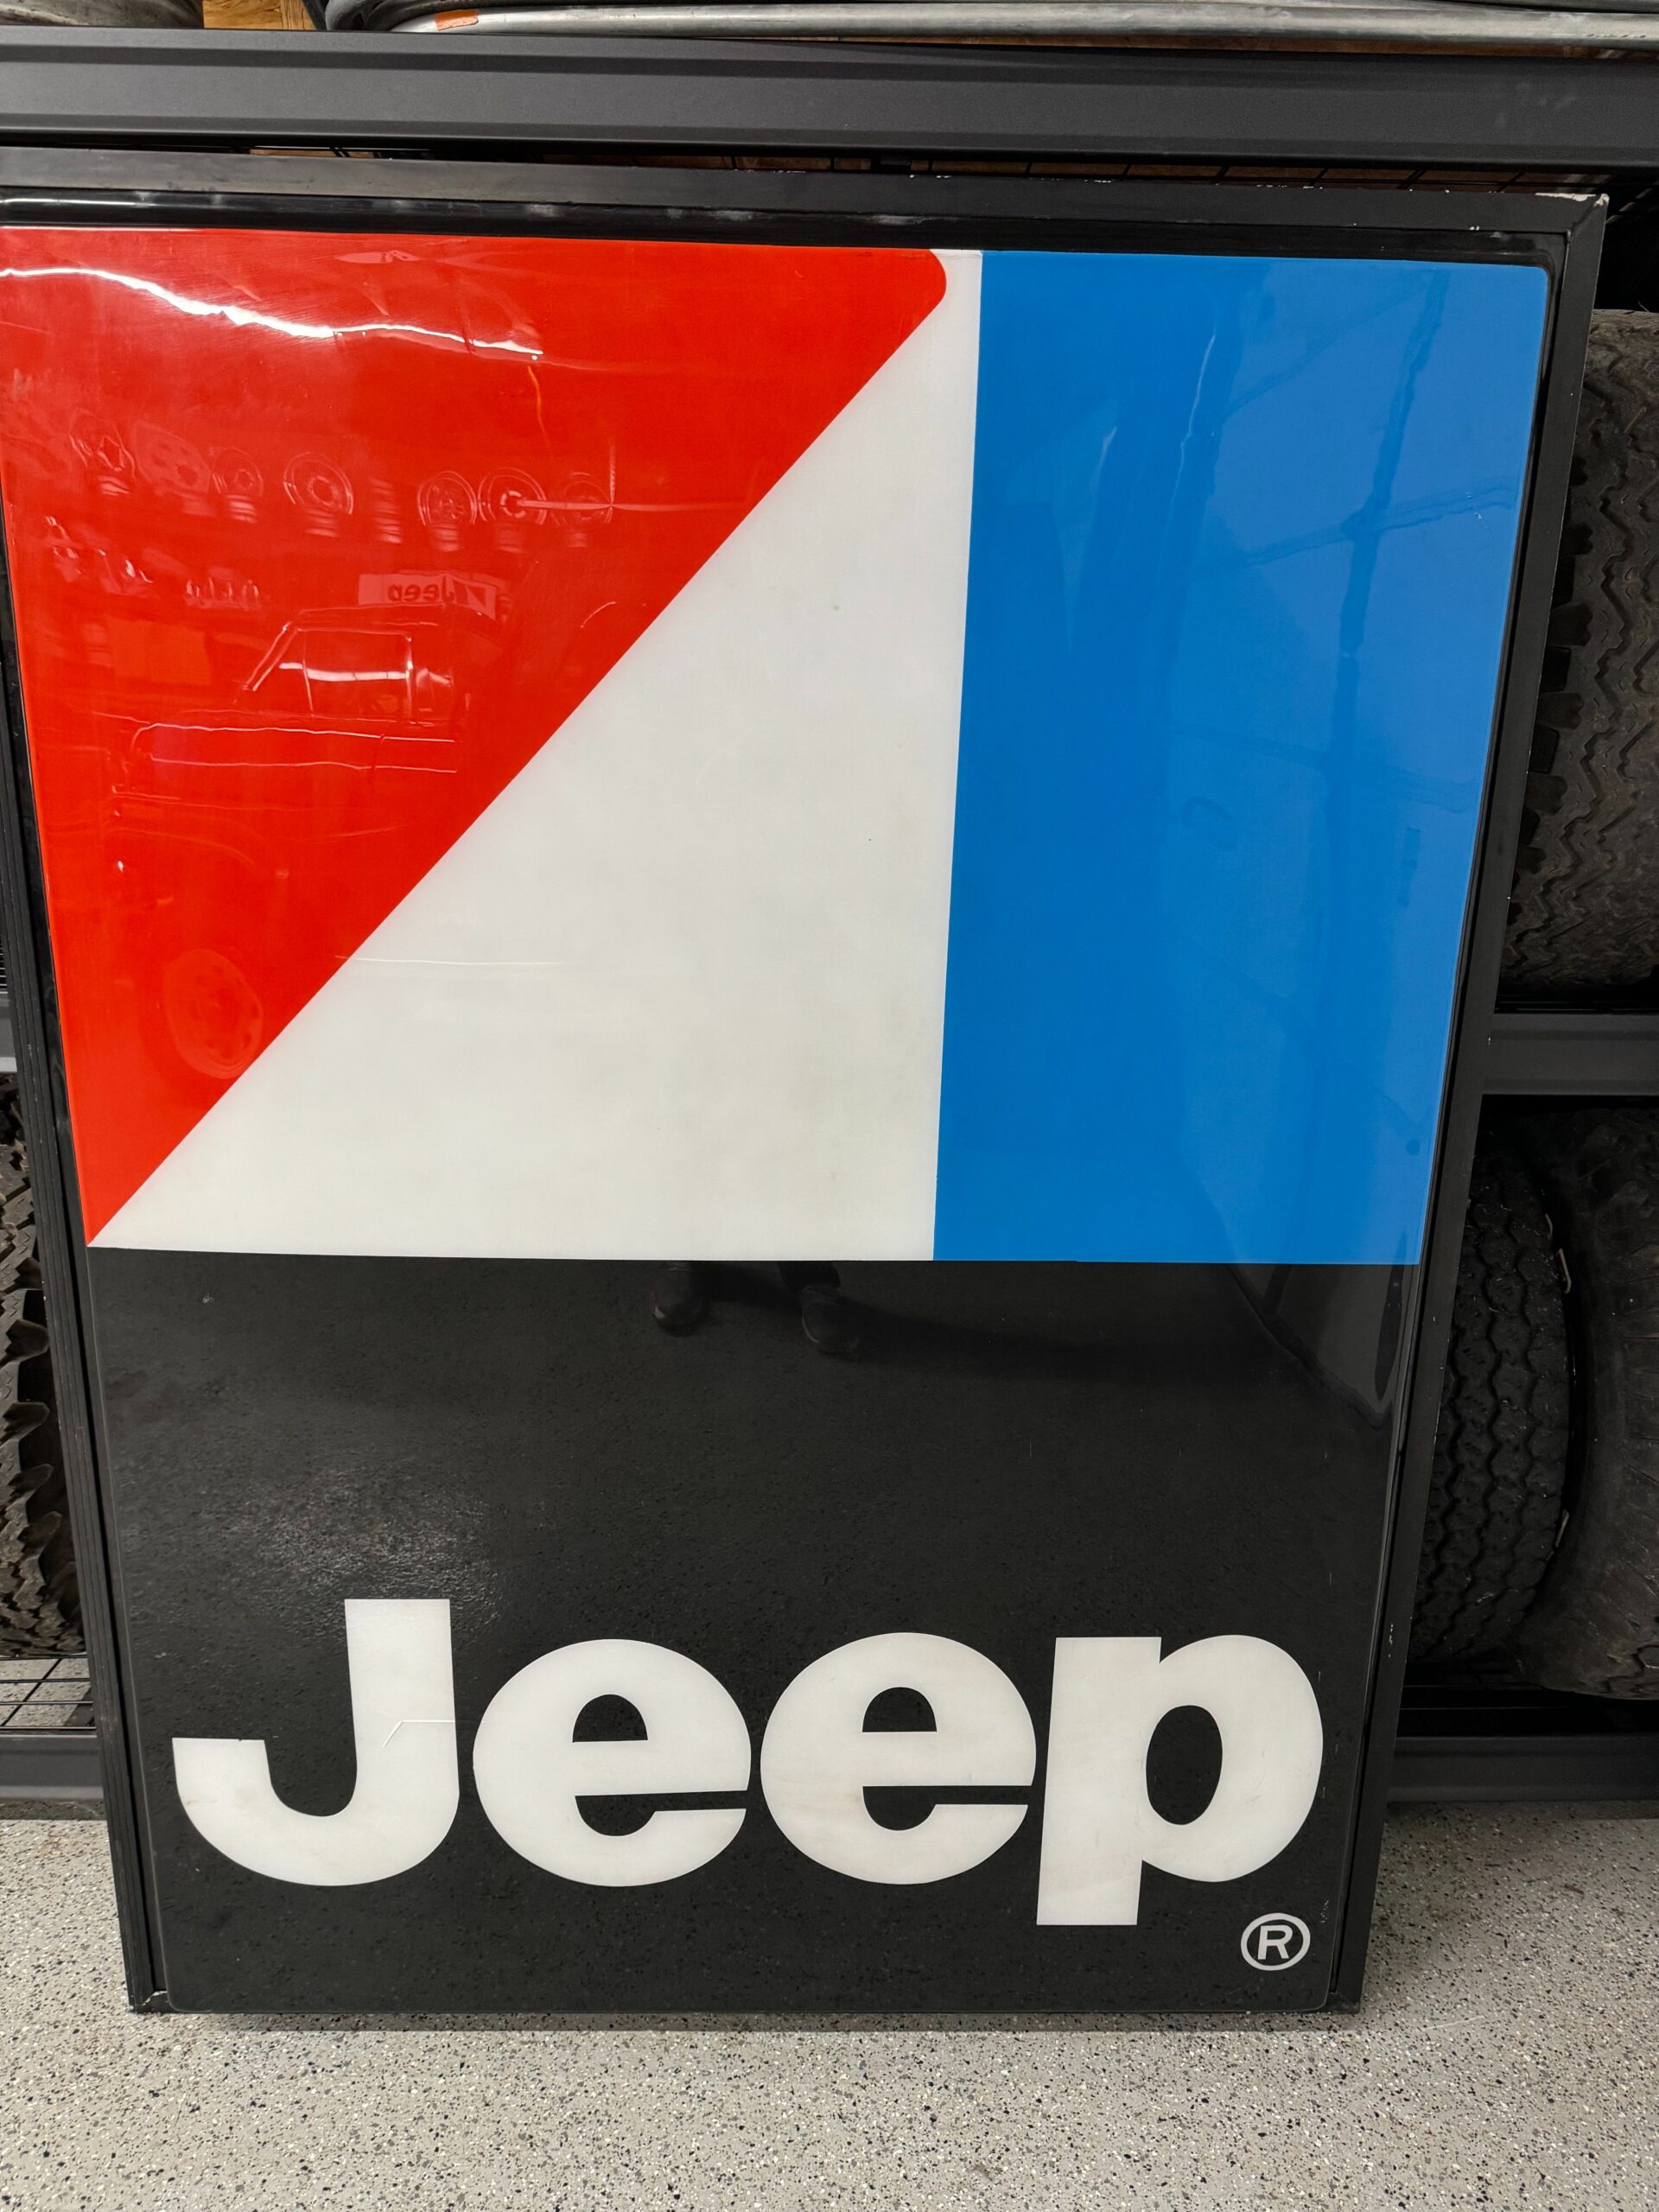 AMC Jeep Dealership Huge Sign Housings Ultra Rare